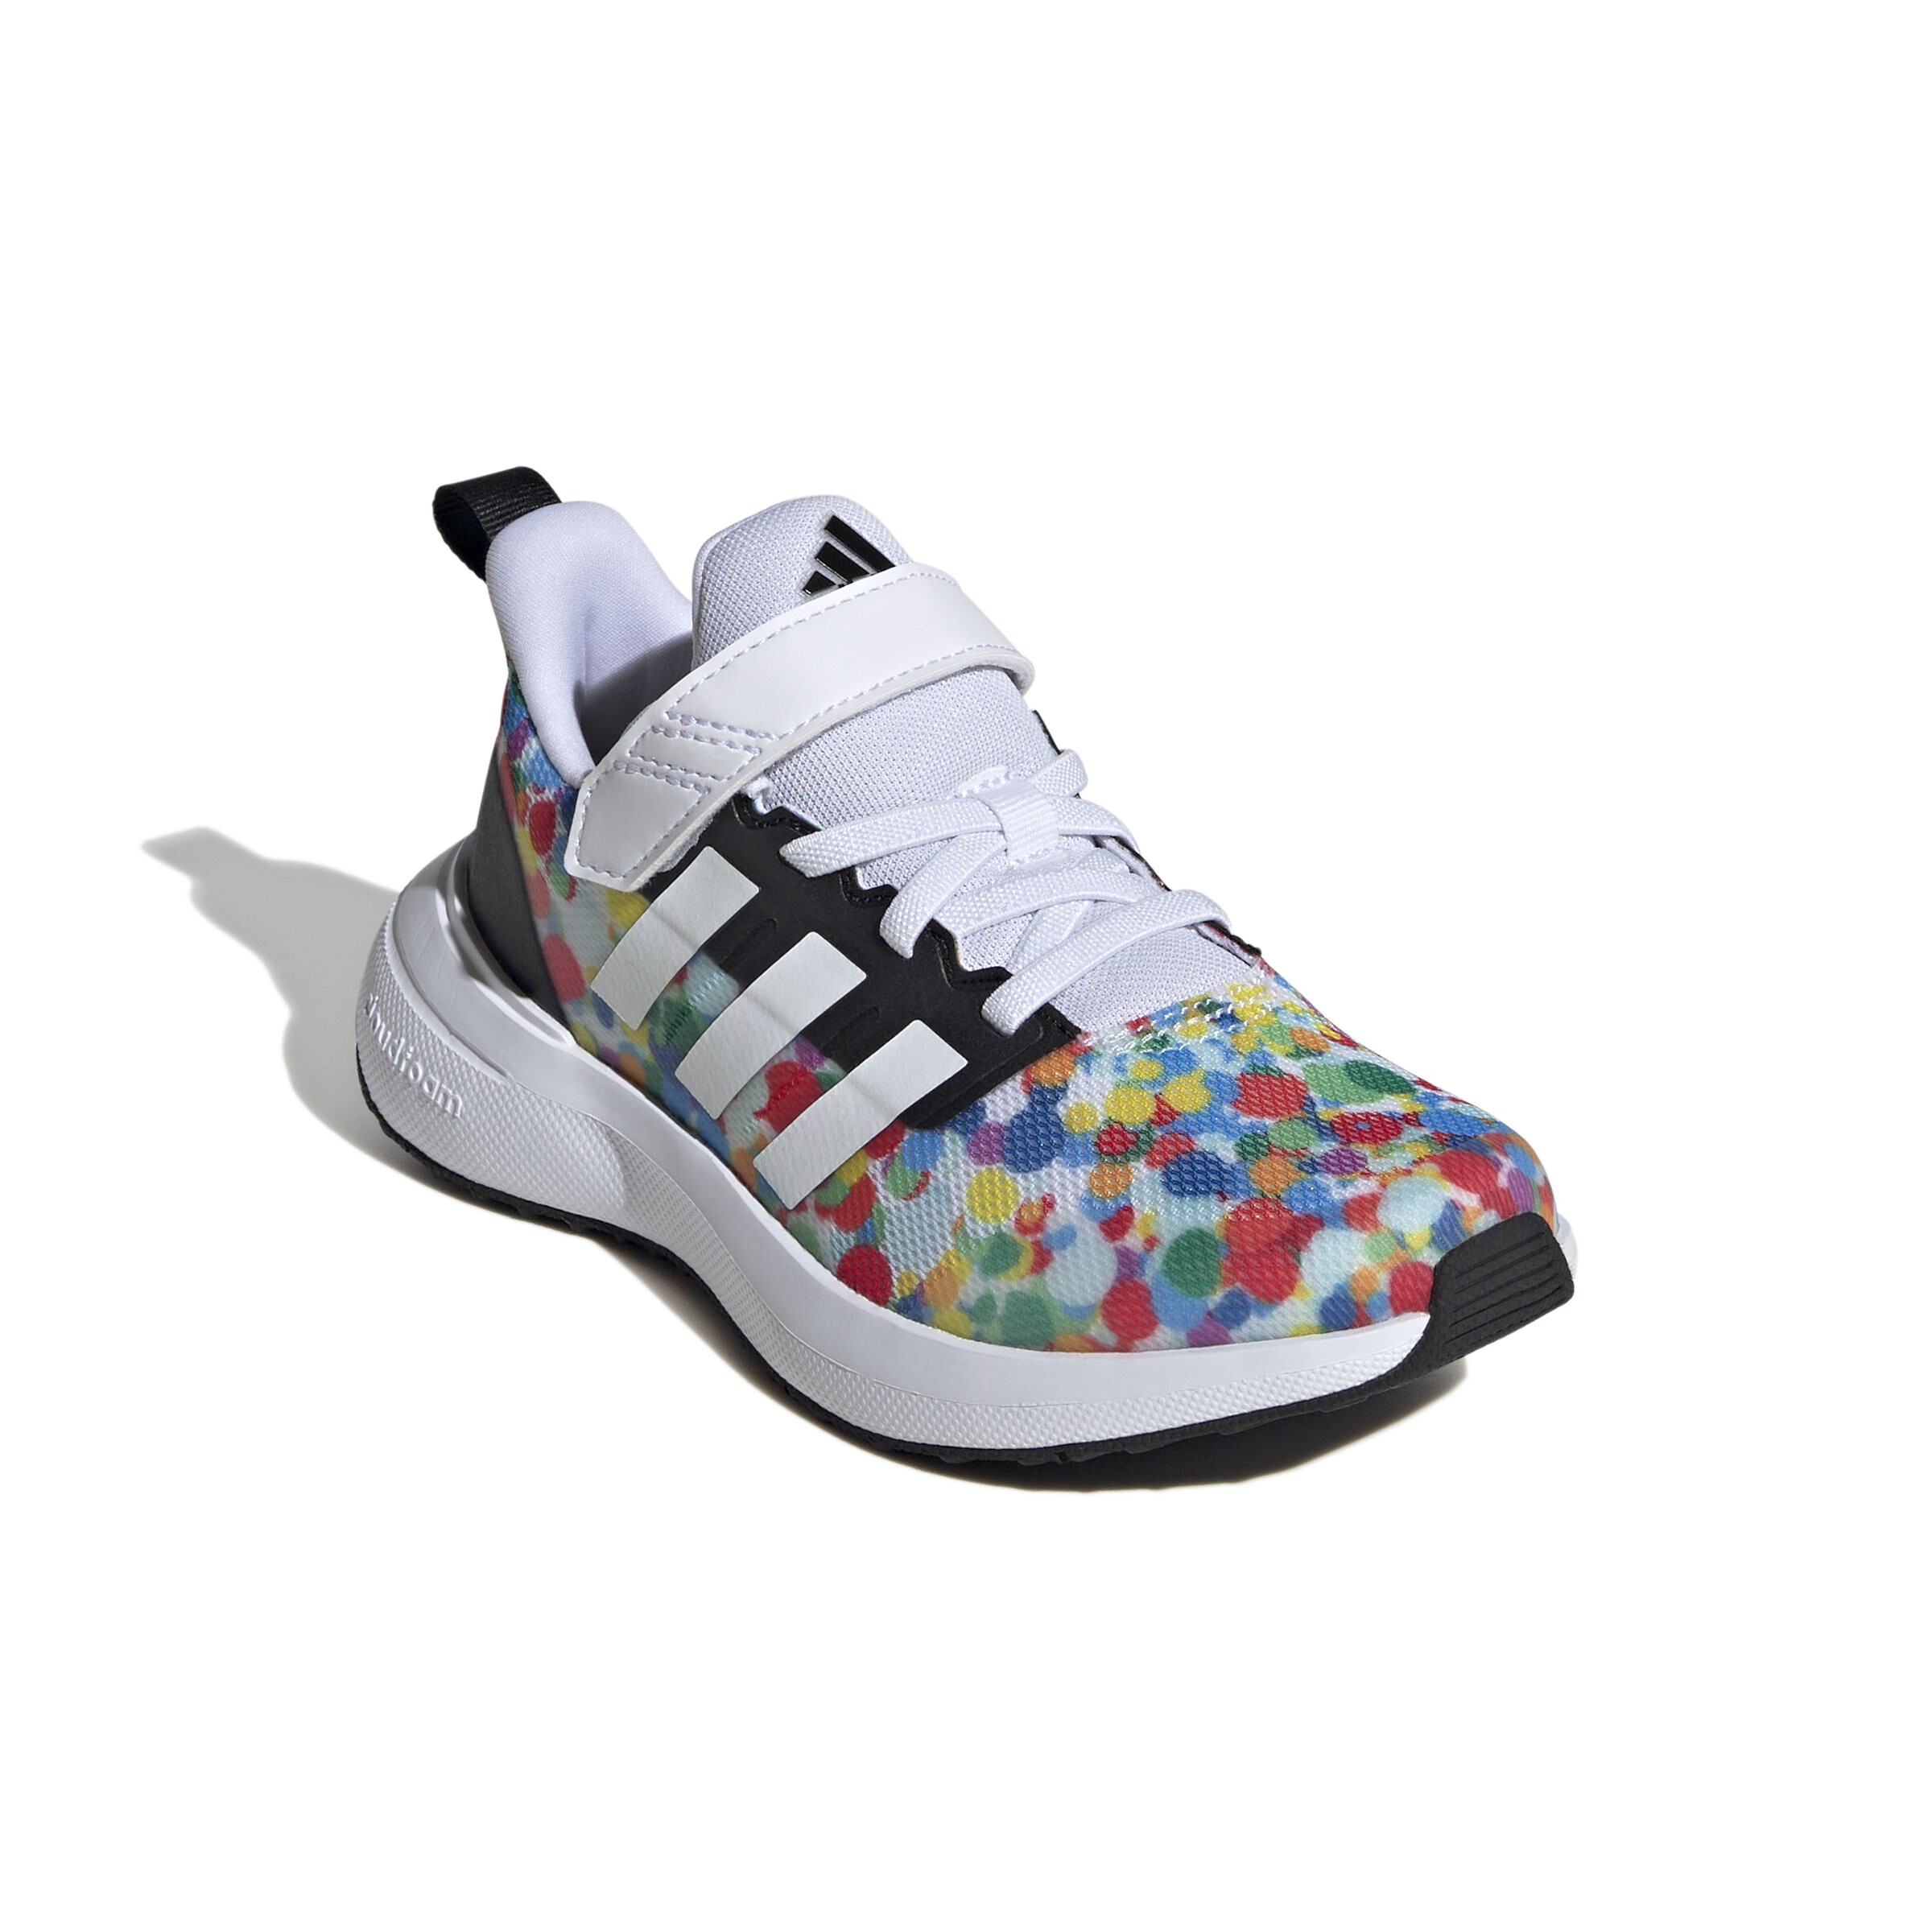 Incaltaminte Fete adidas Kids Adidas Kids Fortarun 20 Elastic Lace Sneakers (Little KidBig Kid) WhiteBlackGreen